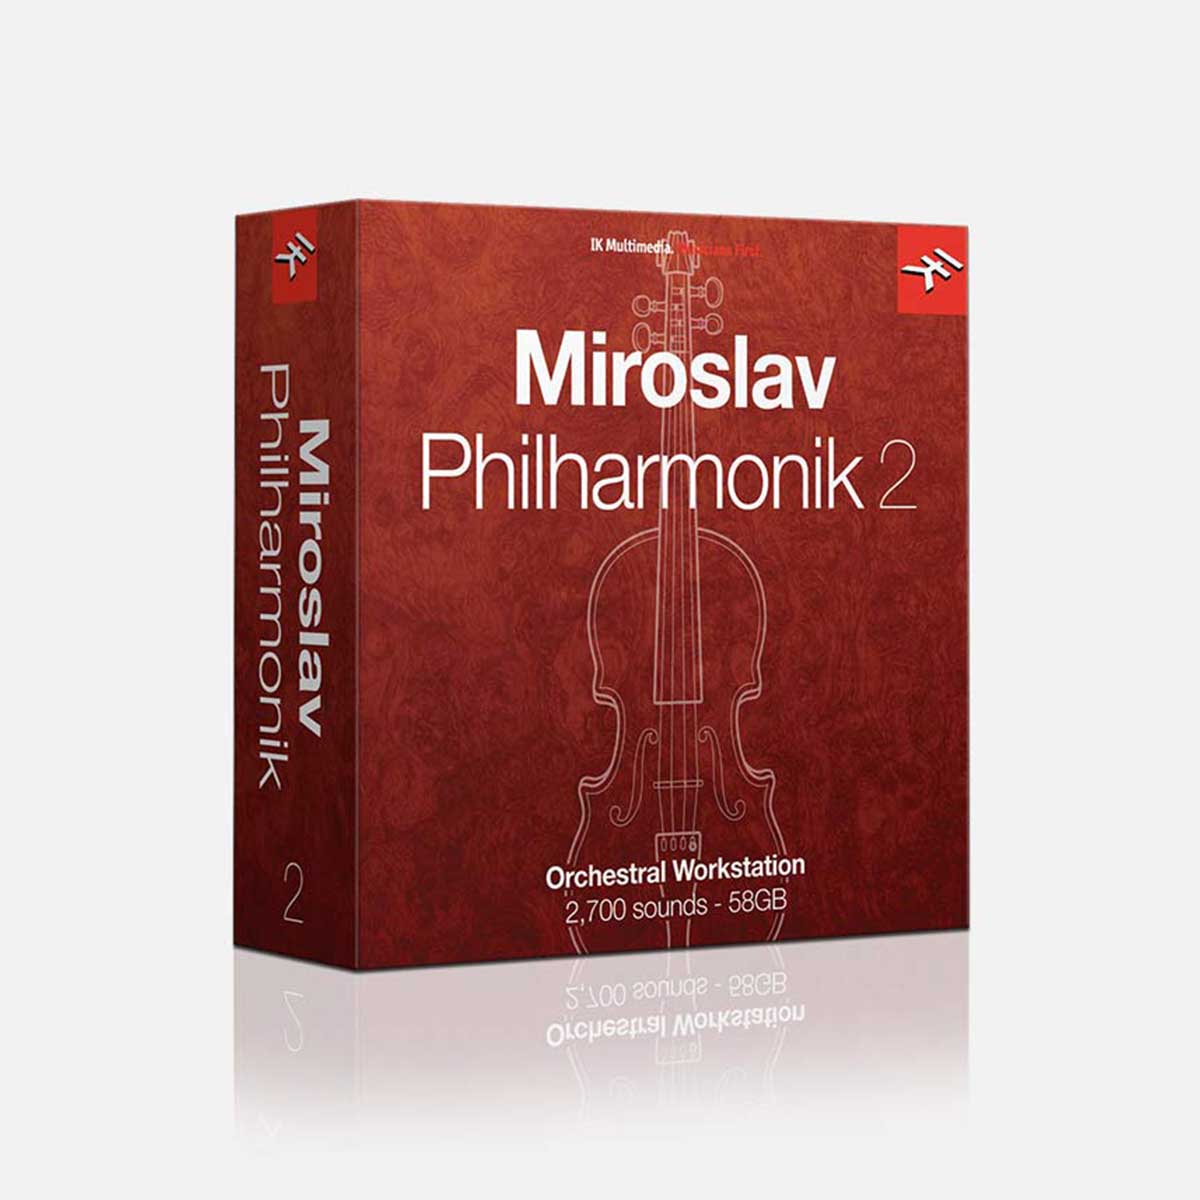 IK Multimedia Miroslav Philharmonik 2 